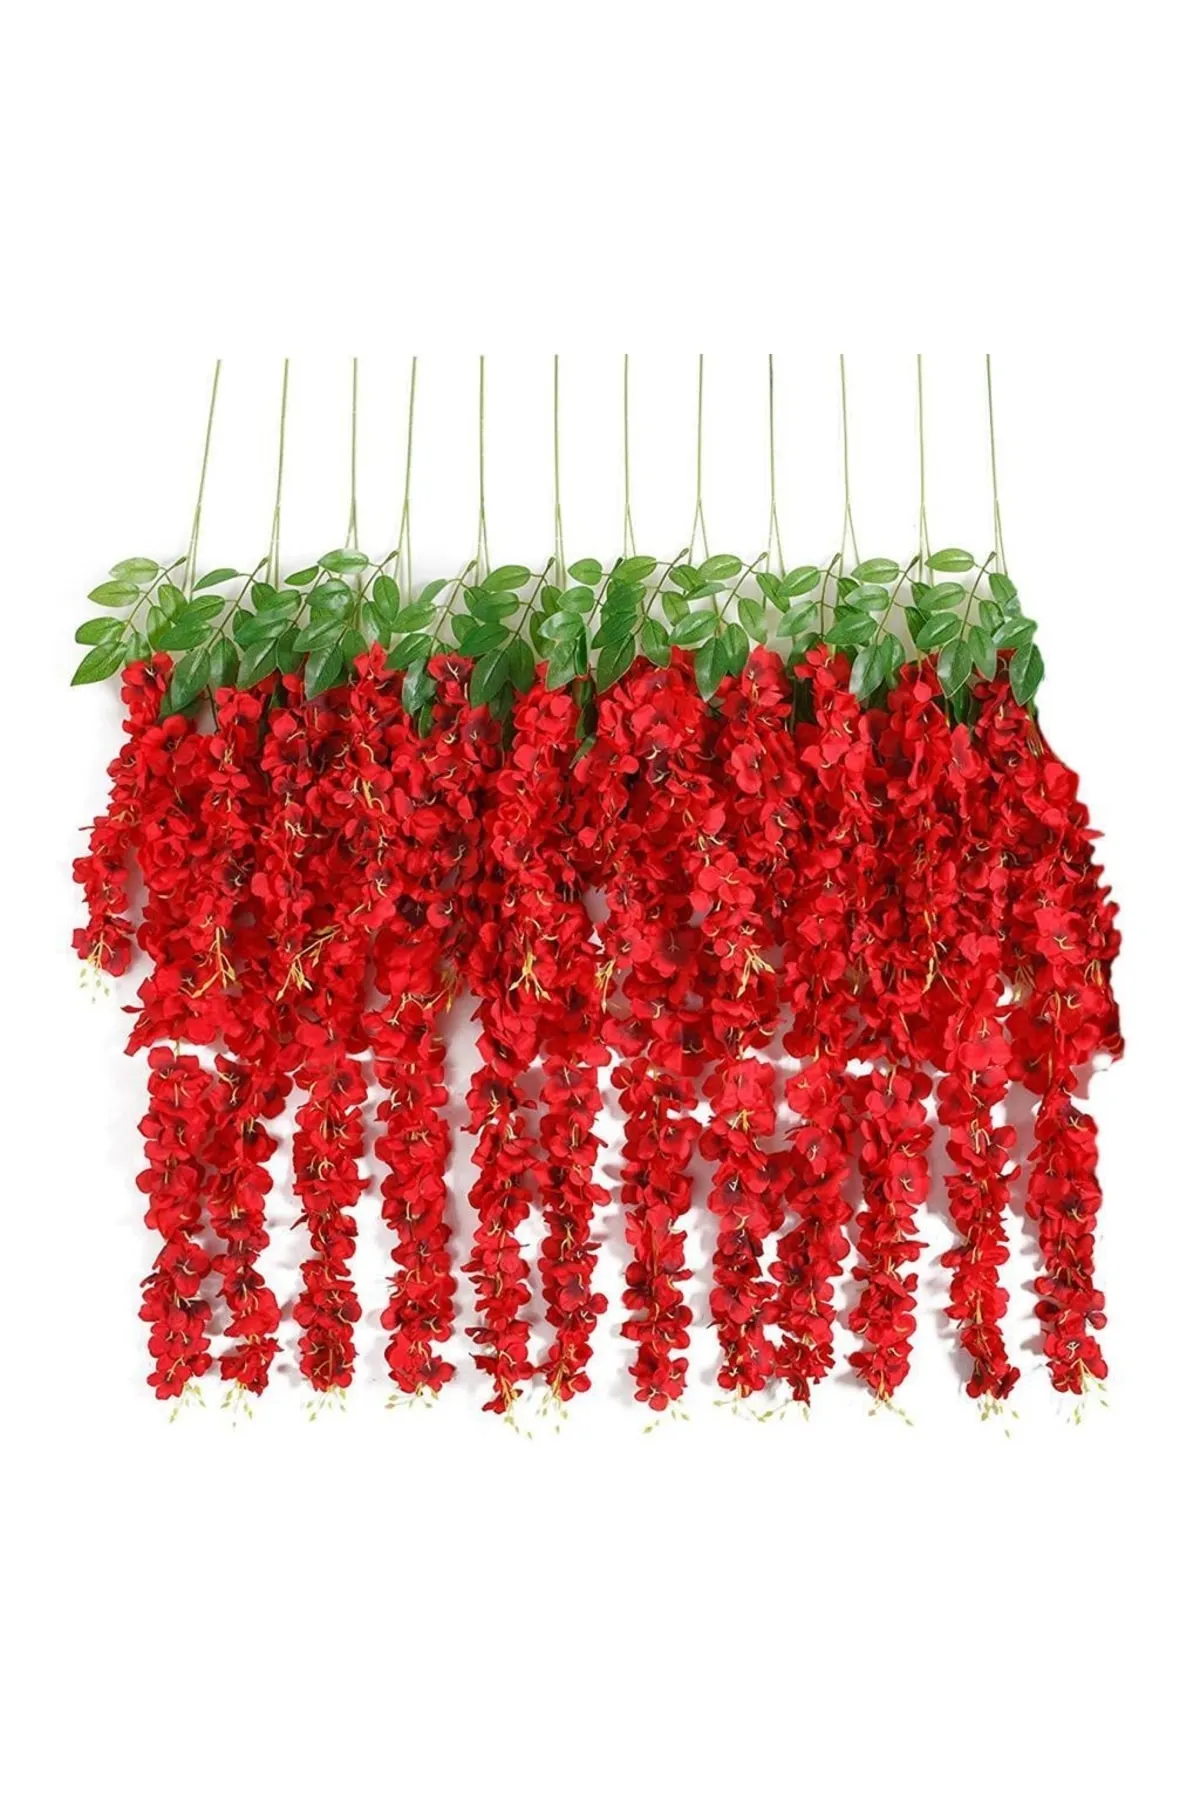 Yapay Sarkan Akasya Çiçeği 80-110 cm Kırmızı 12li Paket - Thumbnail